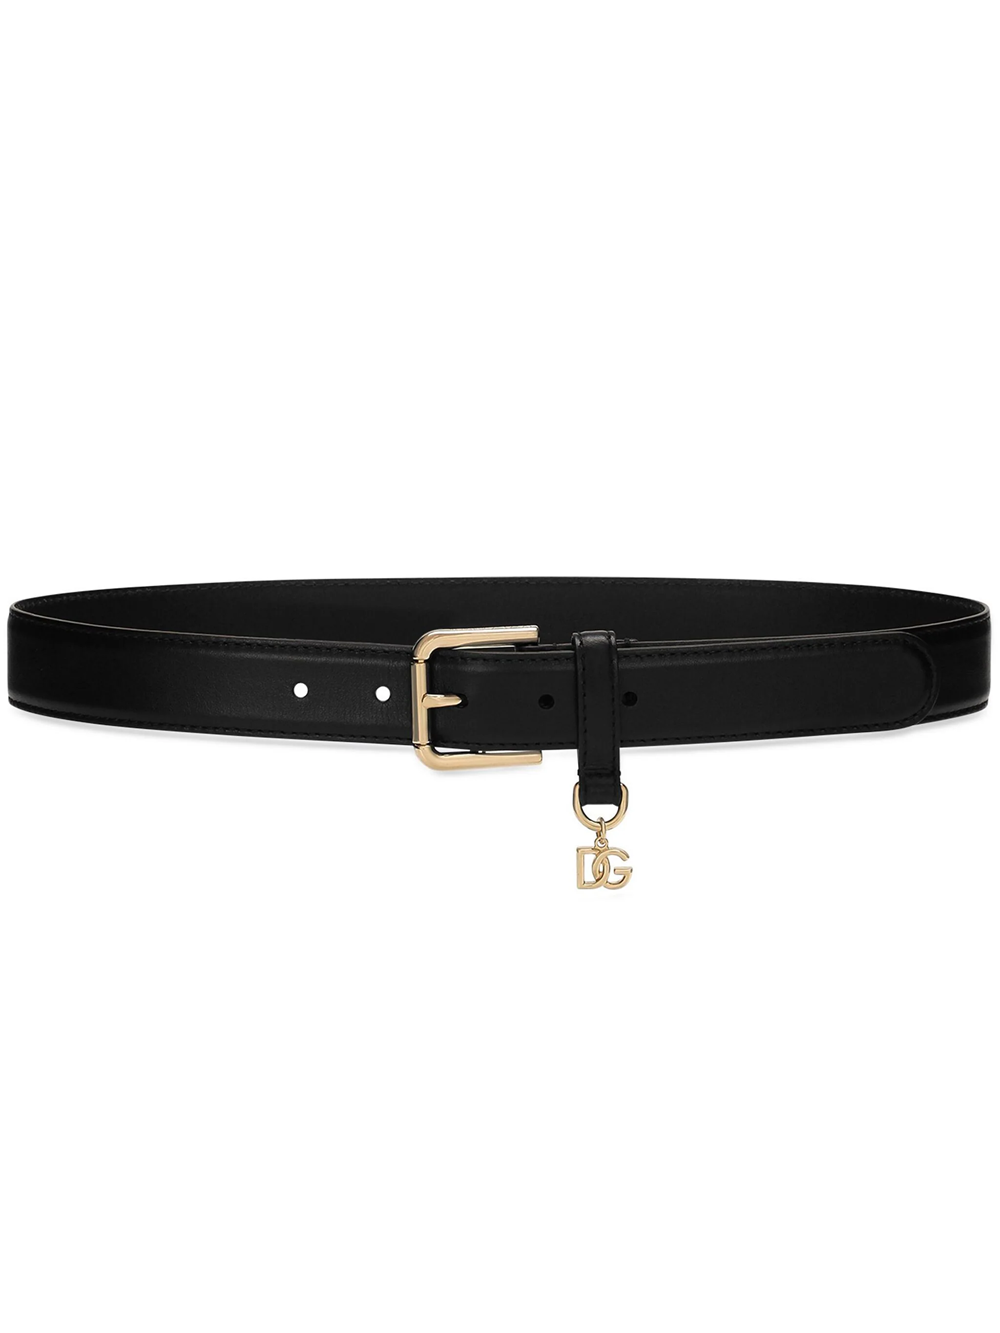 Dolce & Gabbana Belt With Dg Charm In Black